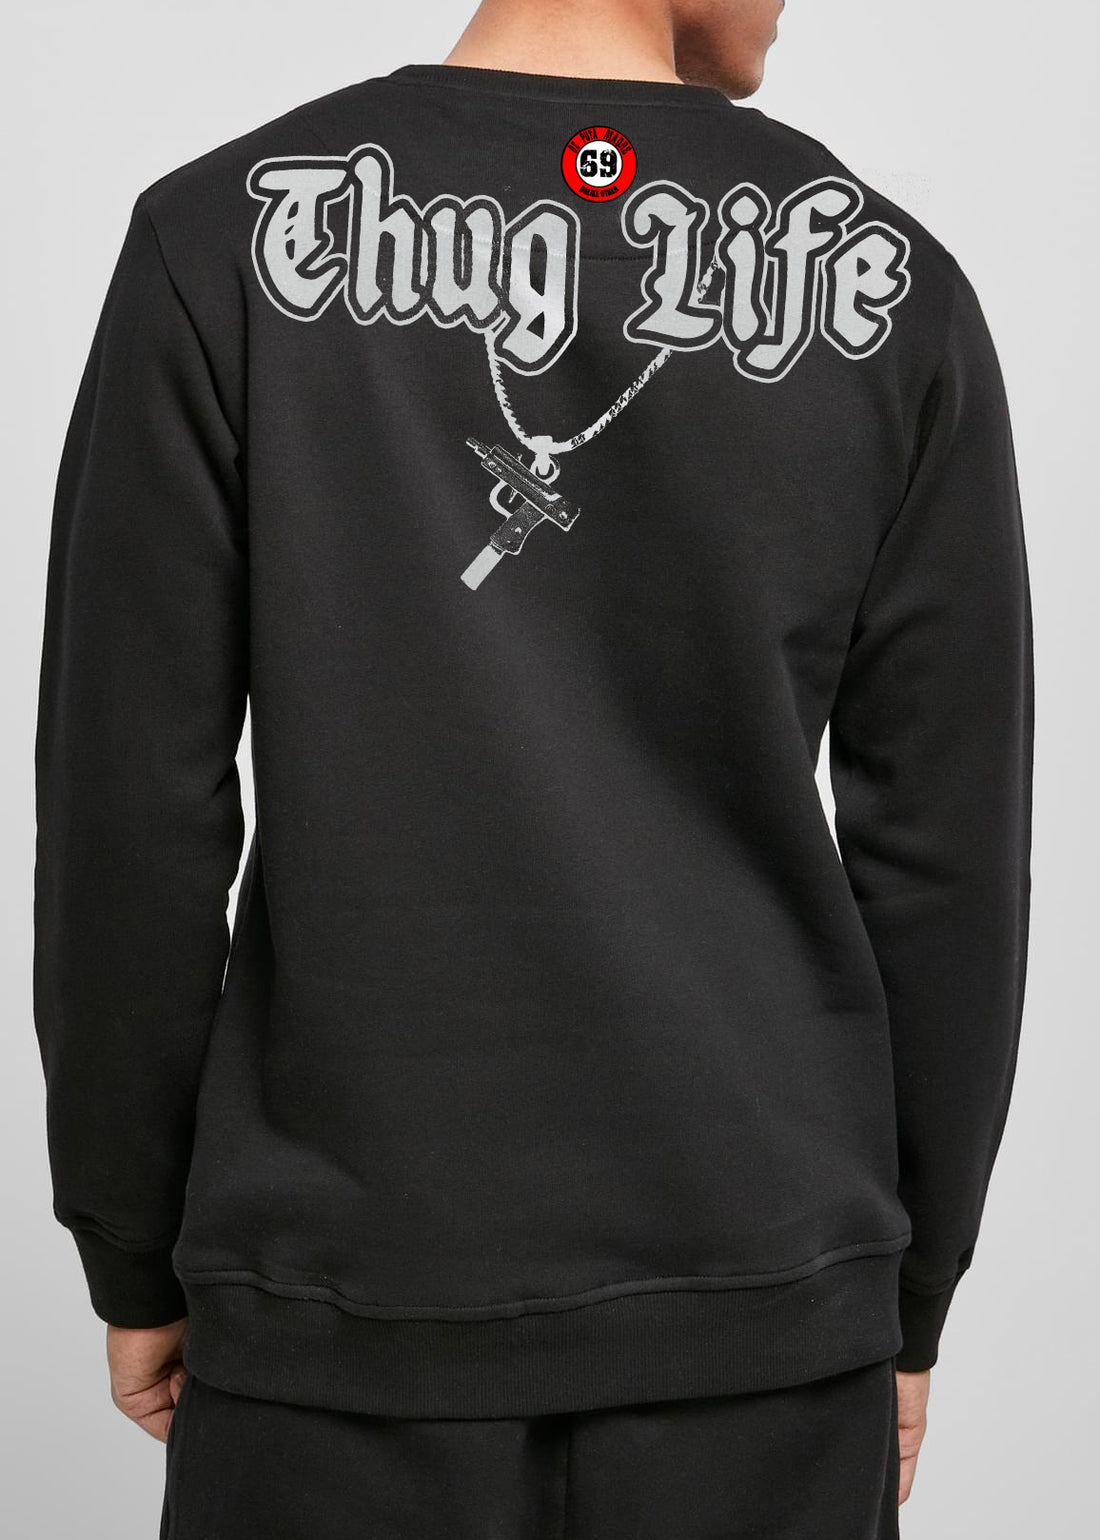 DPM 69 Men's sweatshirt design  Thug Life Pac